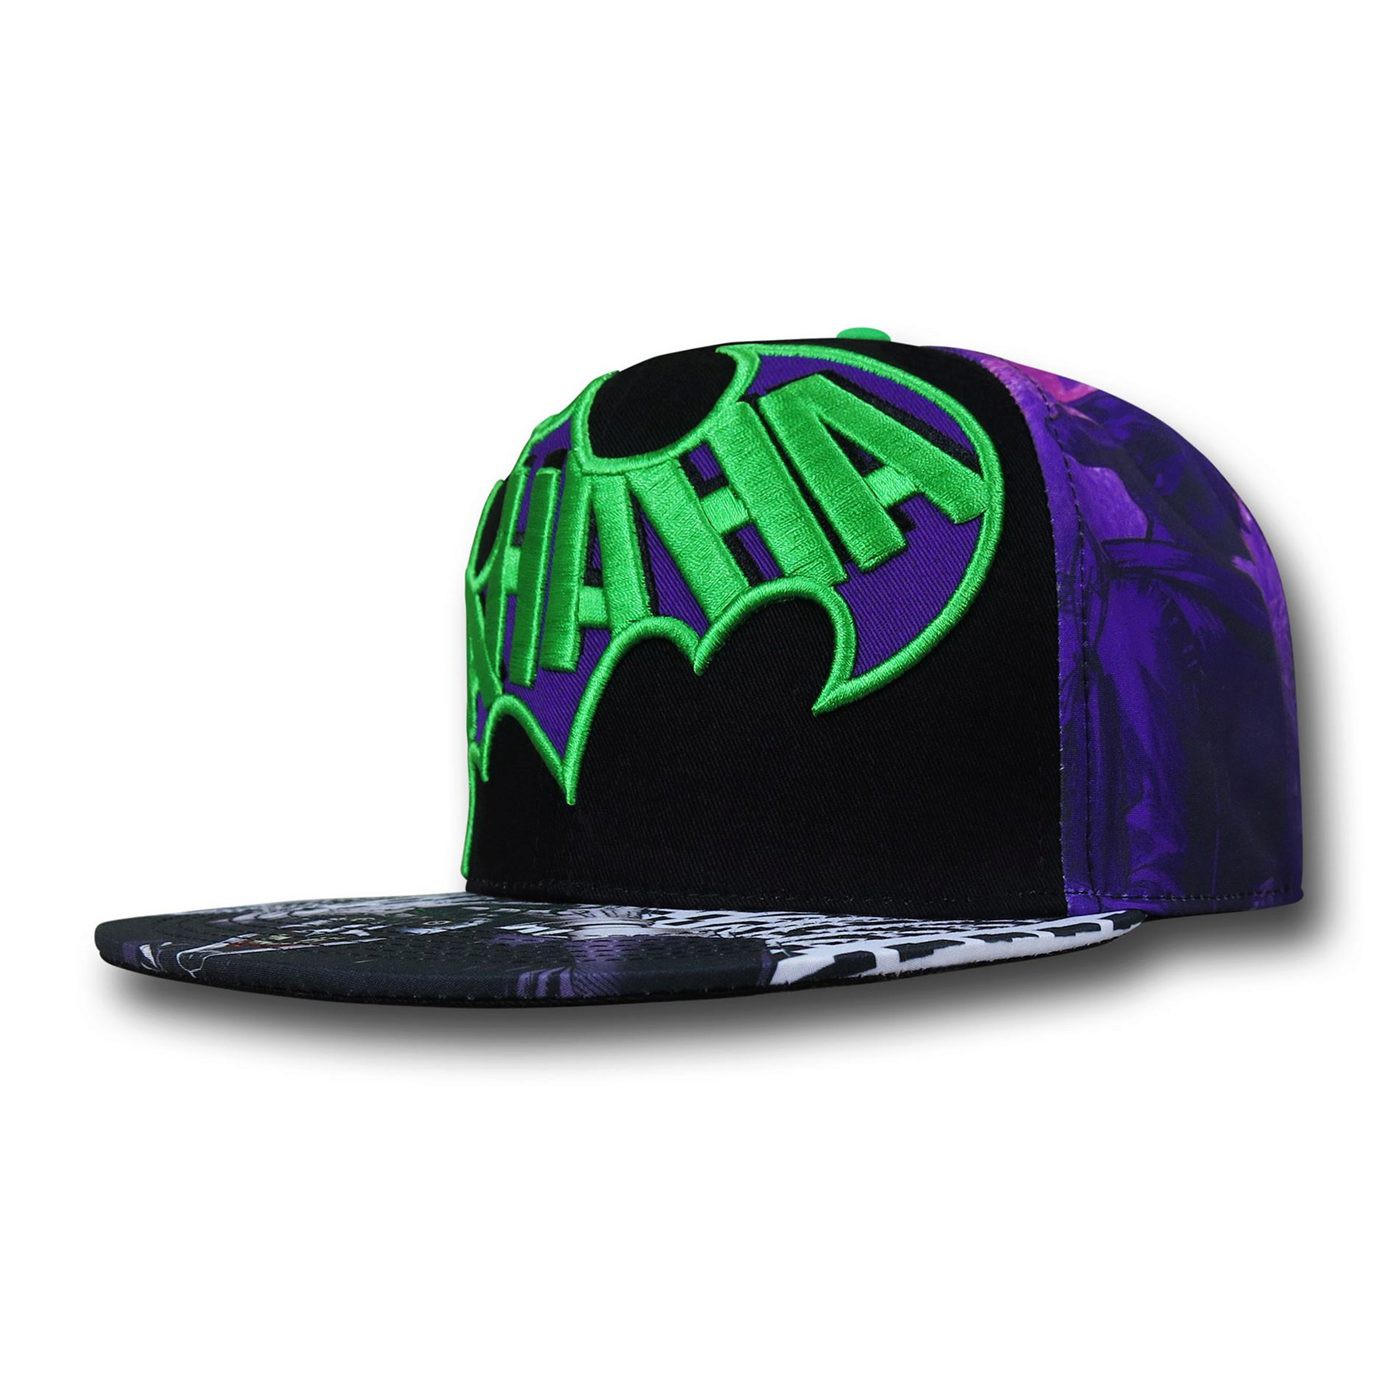 Joker Sublimated Emblem Snapback Cap